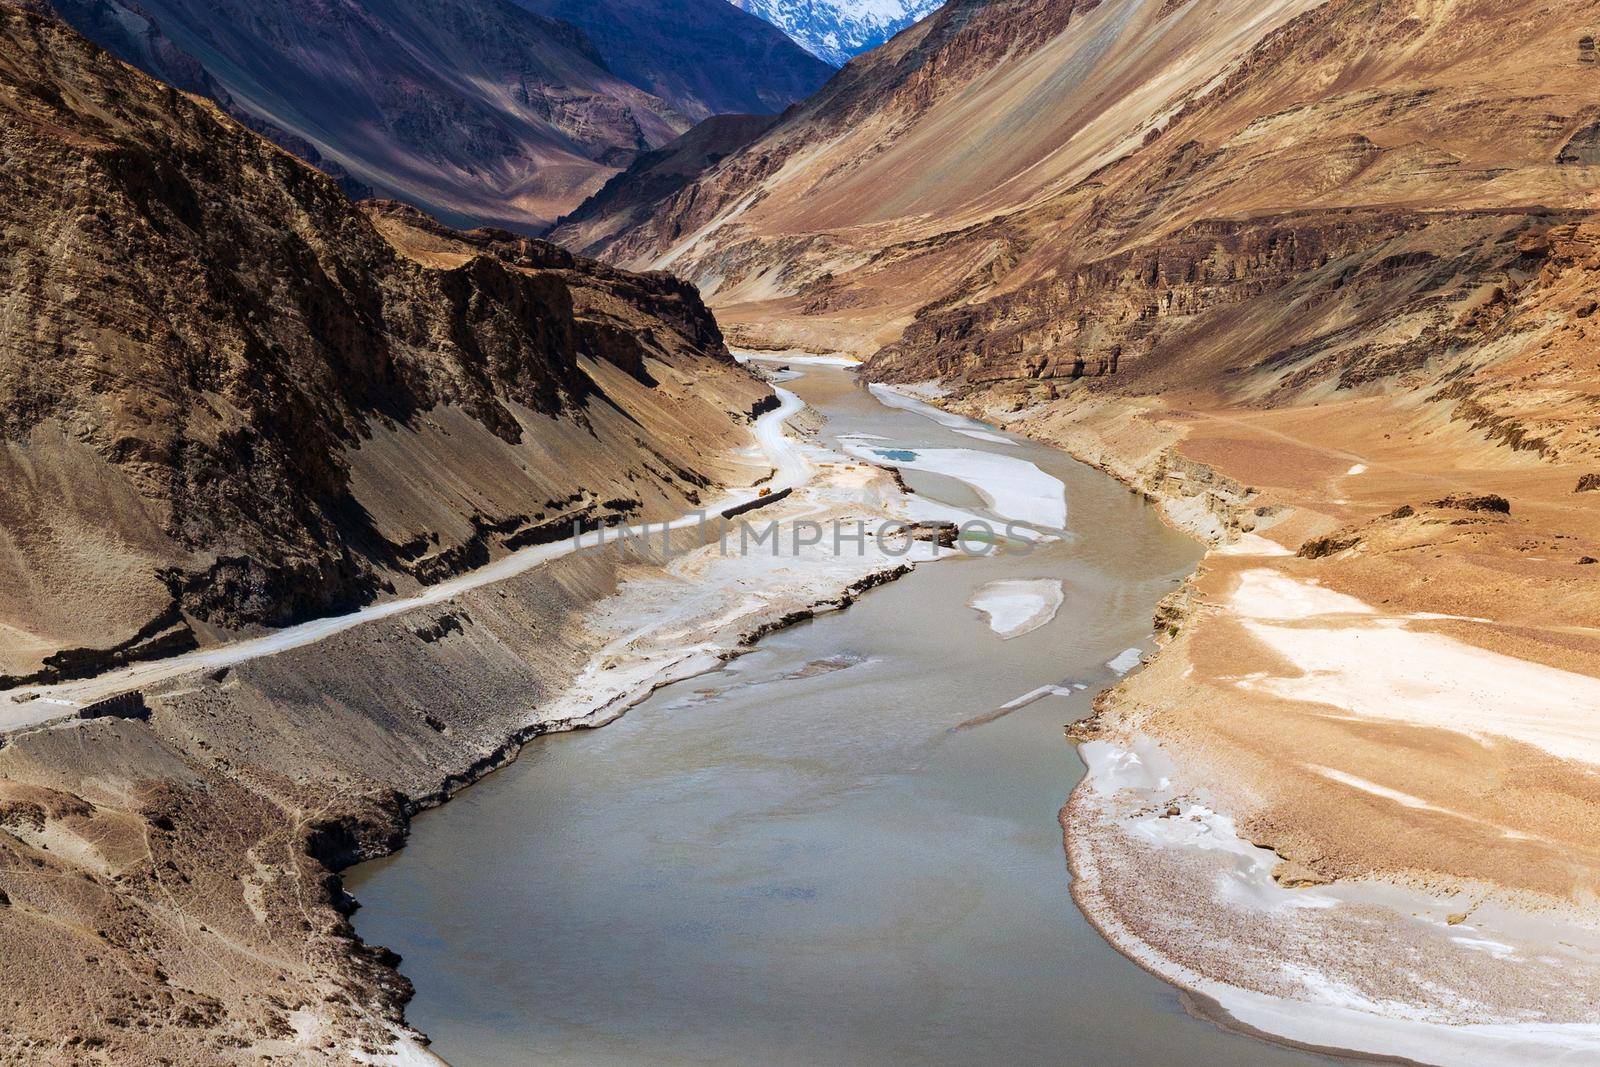 Confluence of Zanskar and Indus rivers - Leh, Ladakh, India
 by Nuamfolio